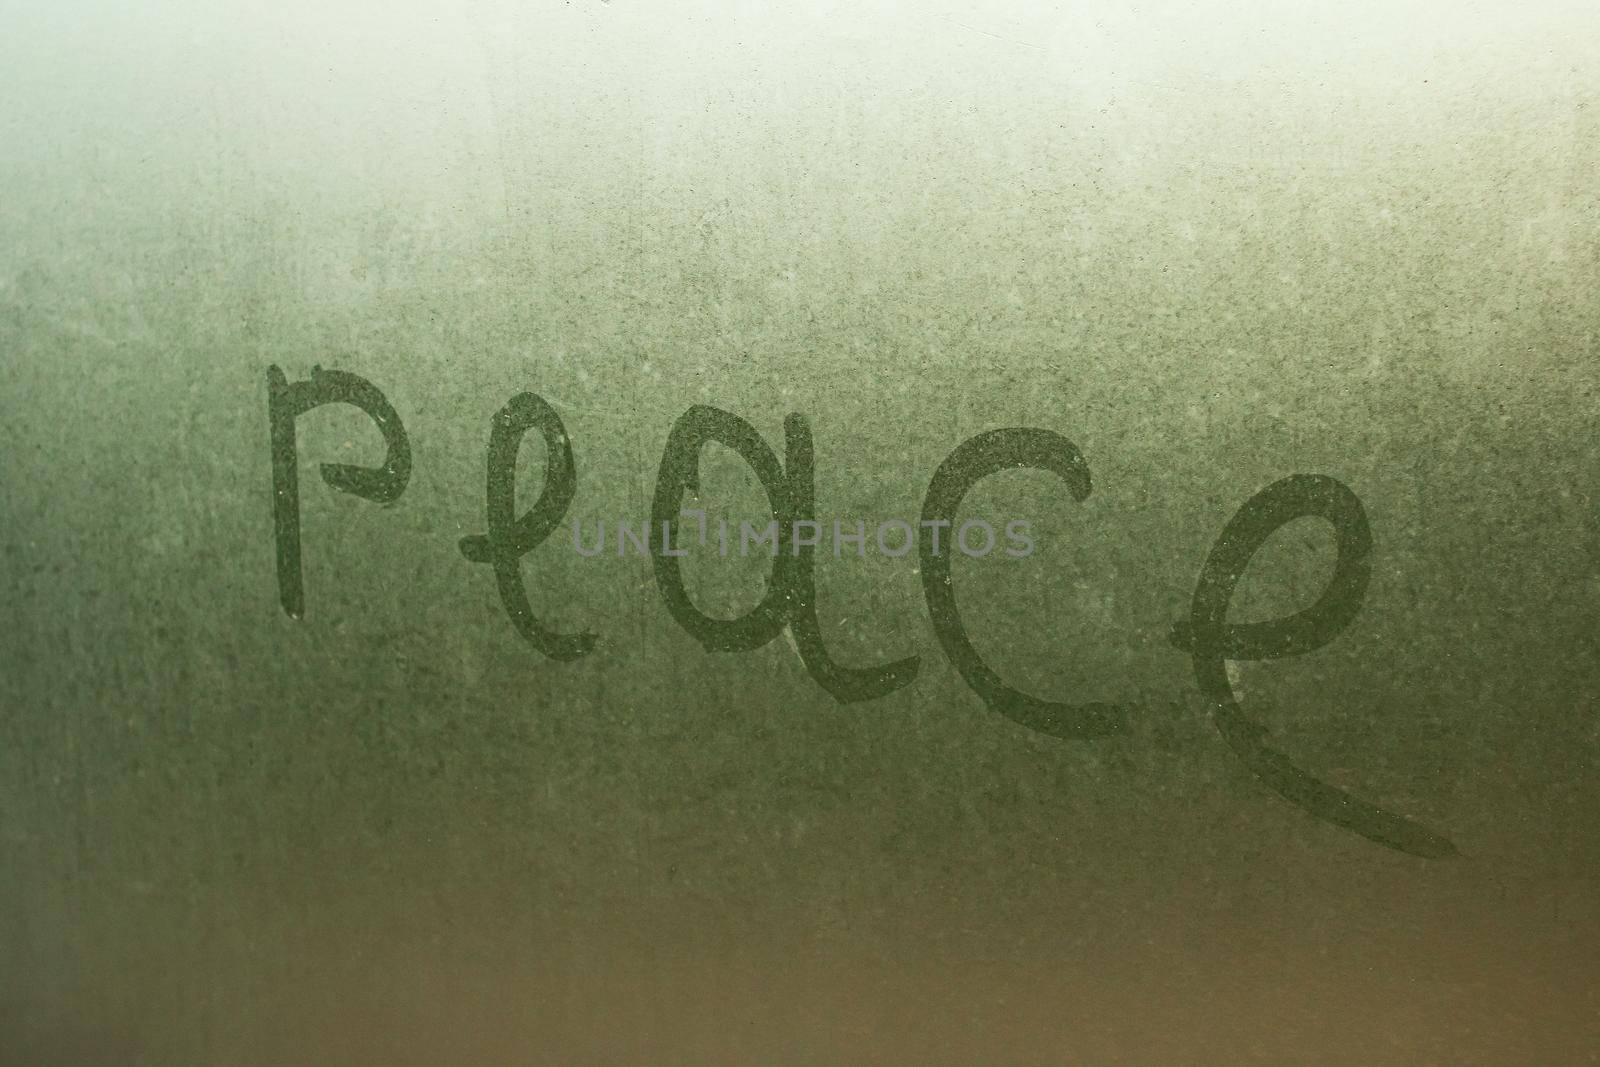 Inscription peace on a wet glass close up